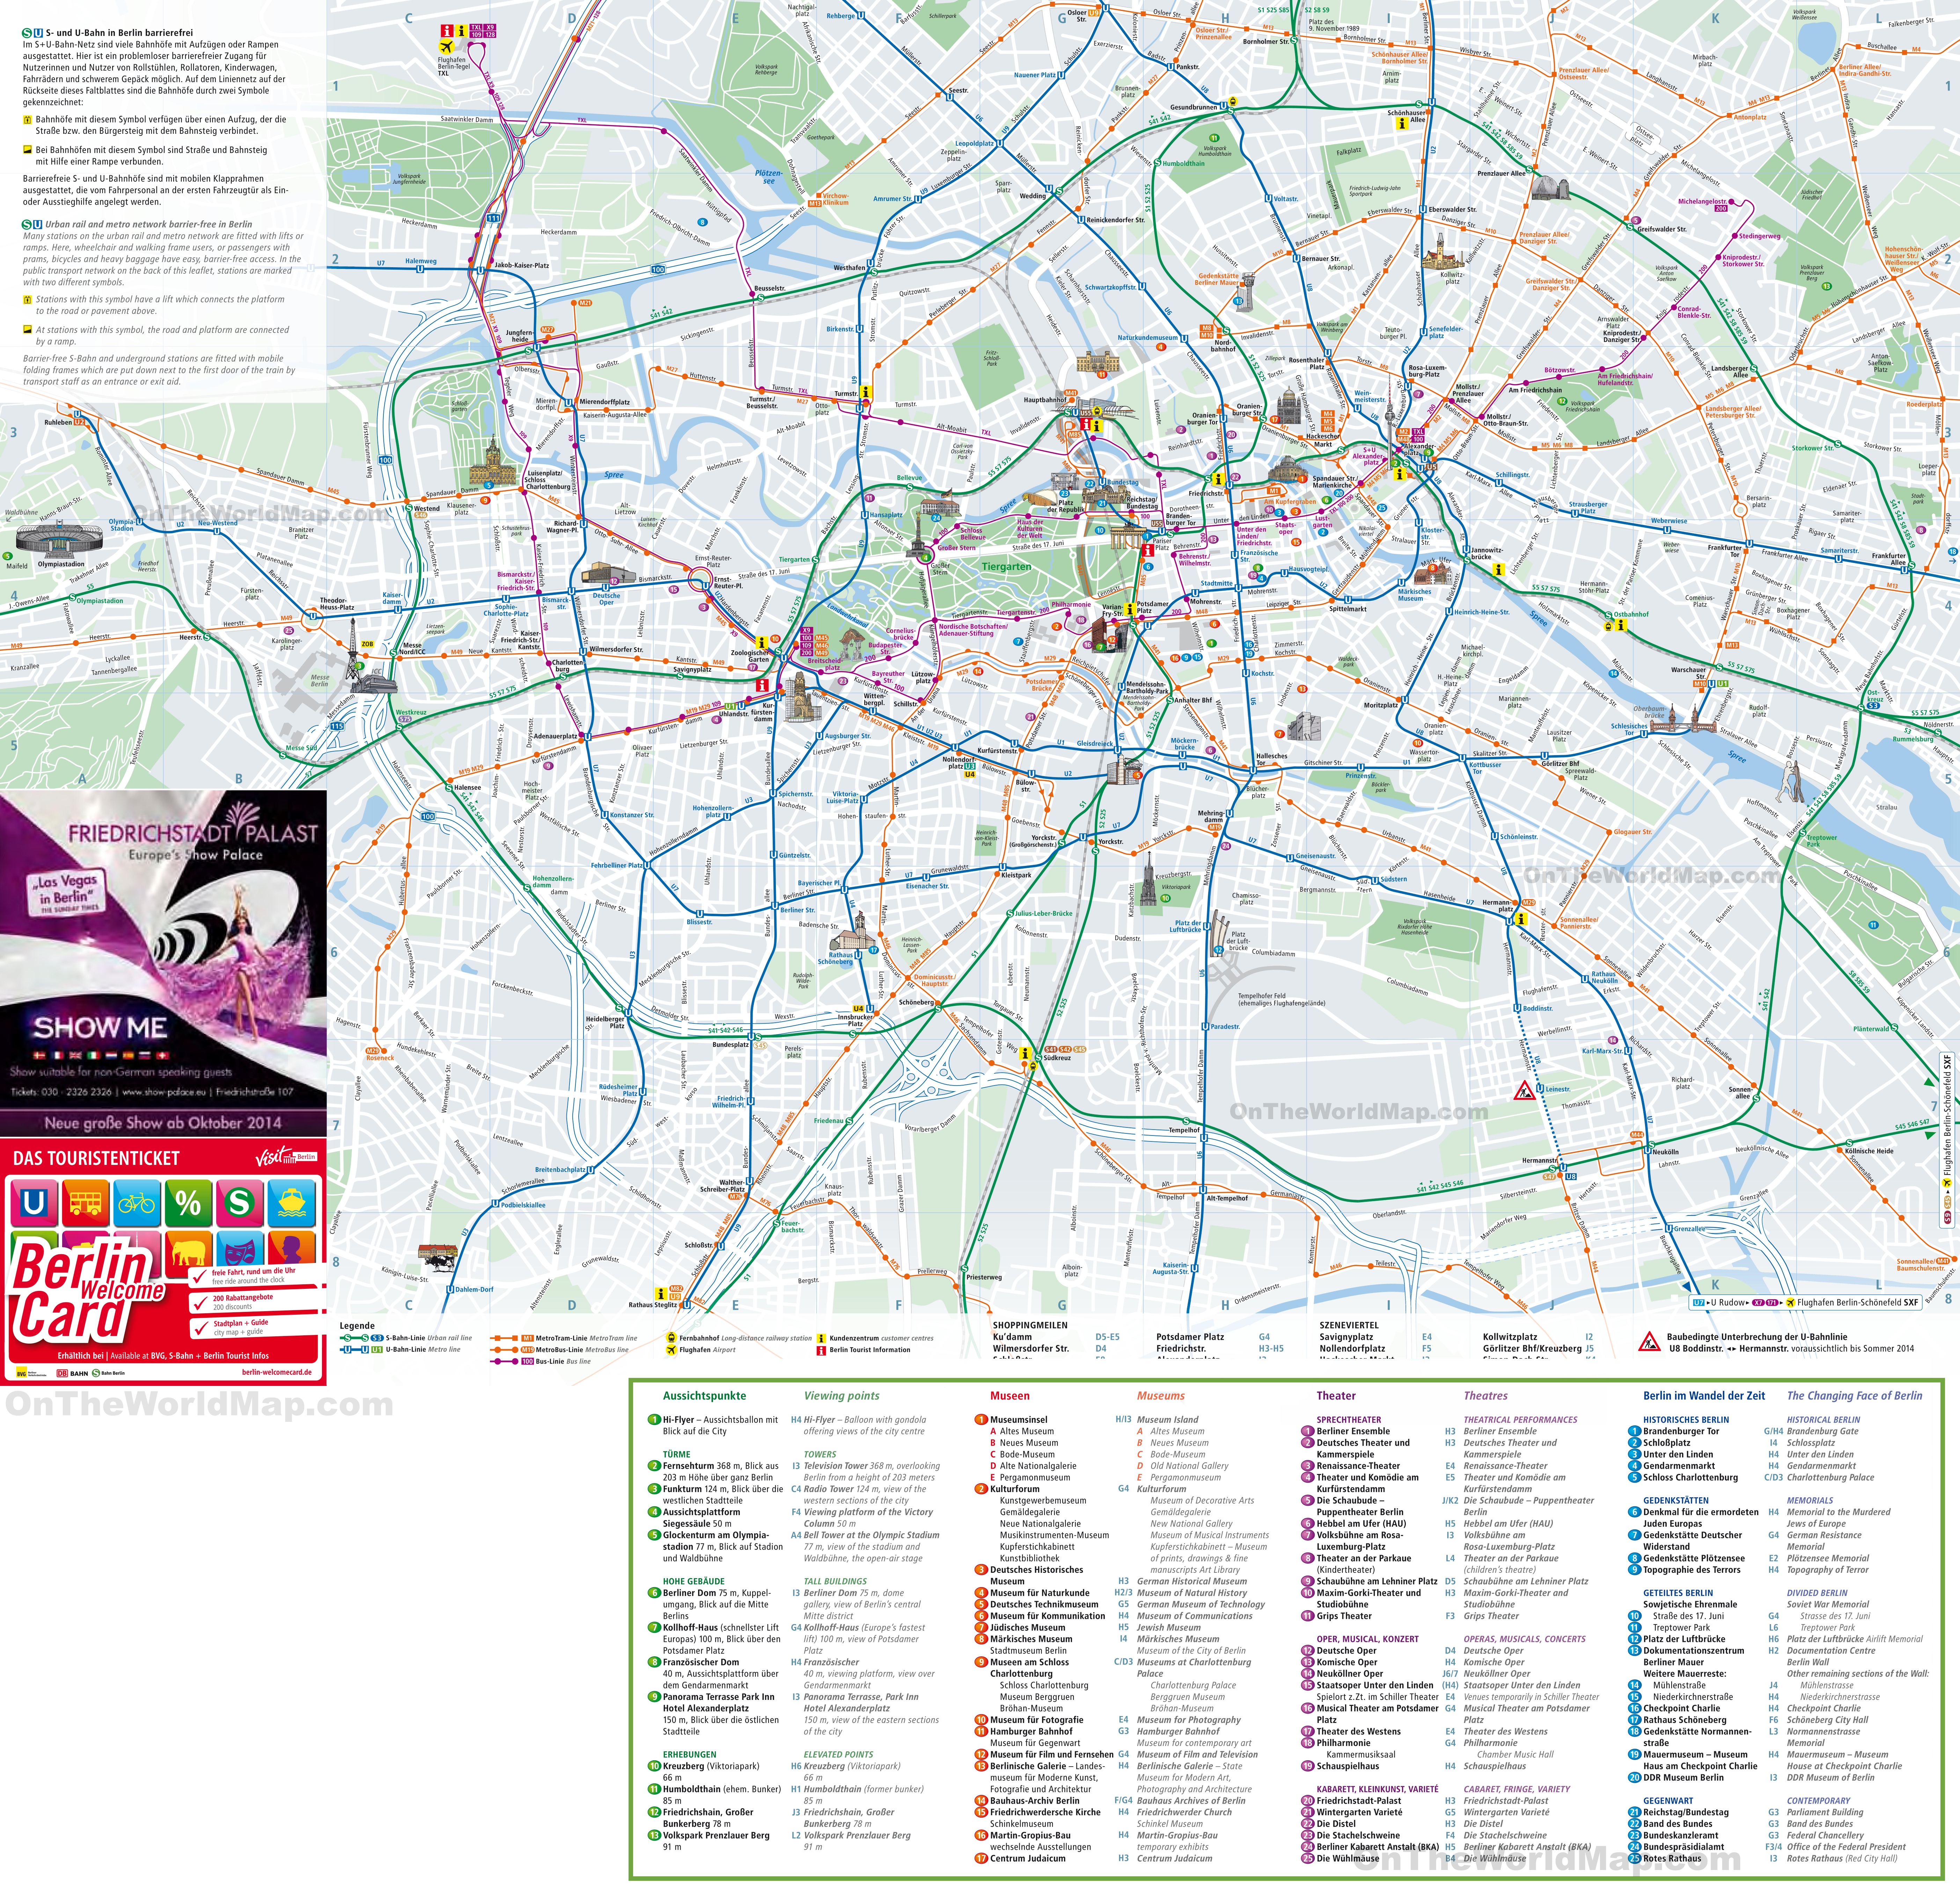 berlin-tourist-attractions-map.jpg